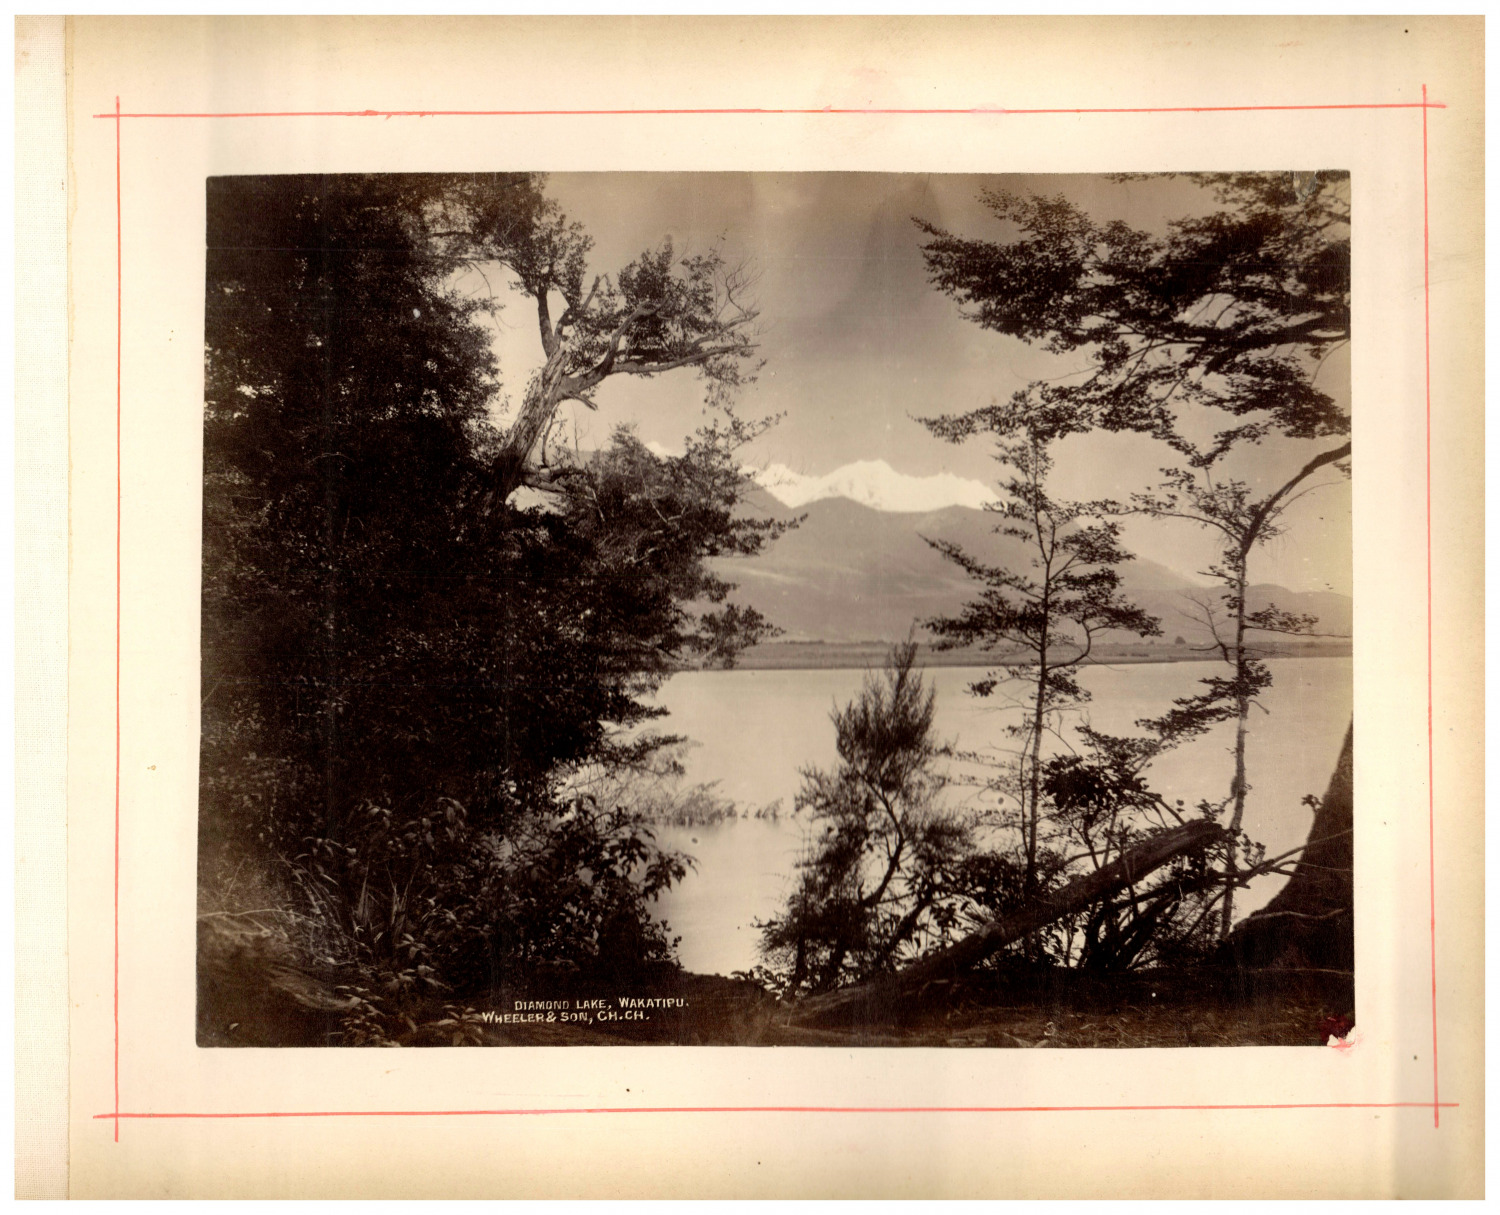 New Zealand, Diamond Lake, Wakatipu, Photo. Vintage Wheeler Print, Album Print